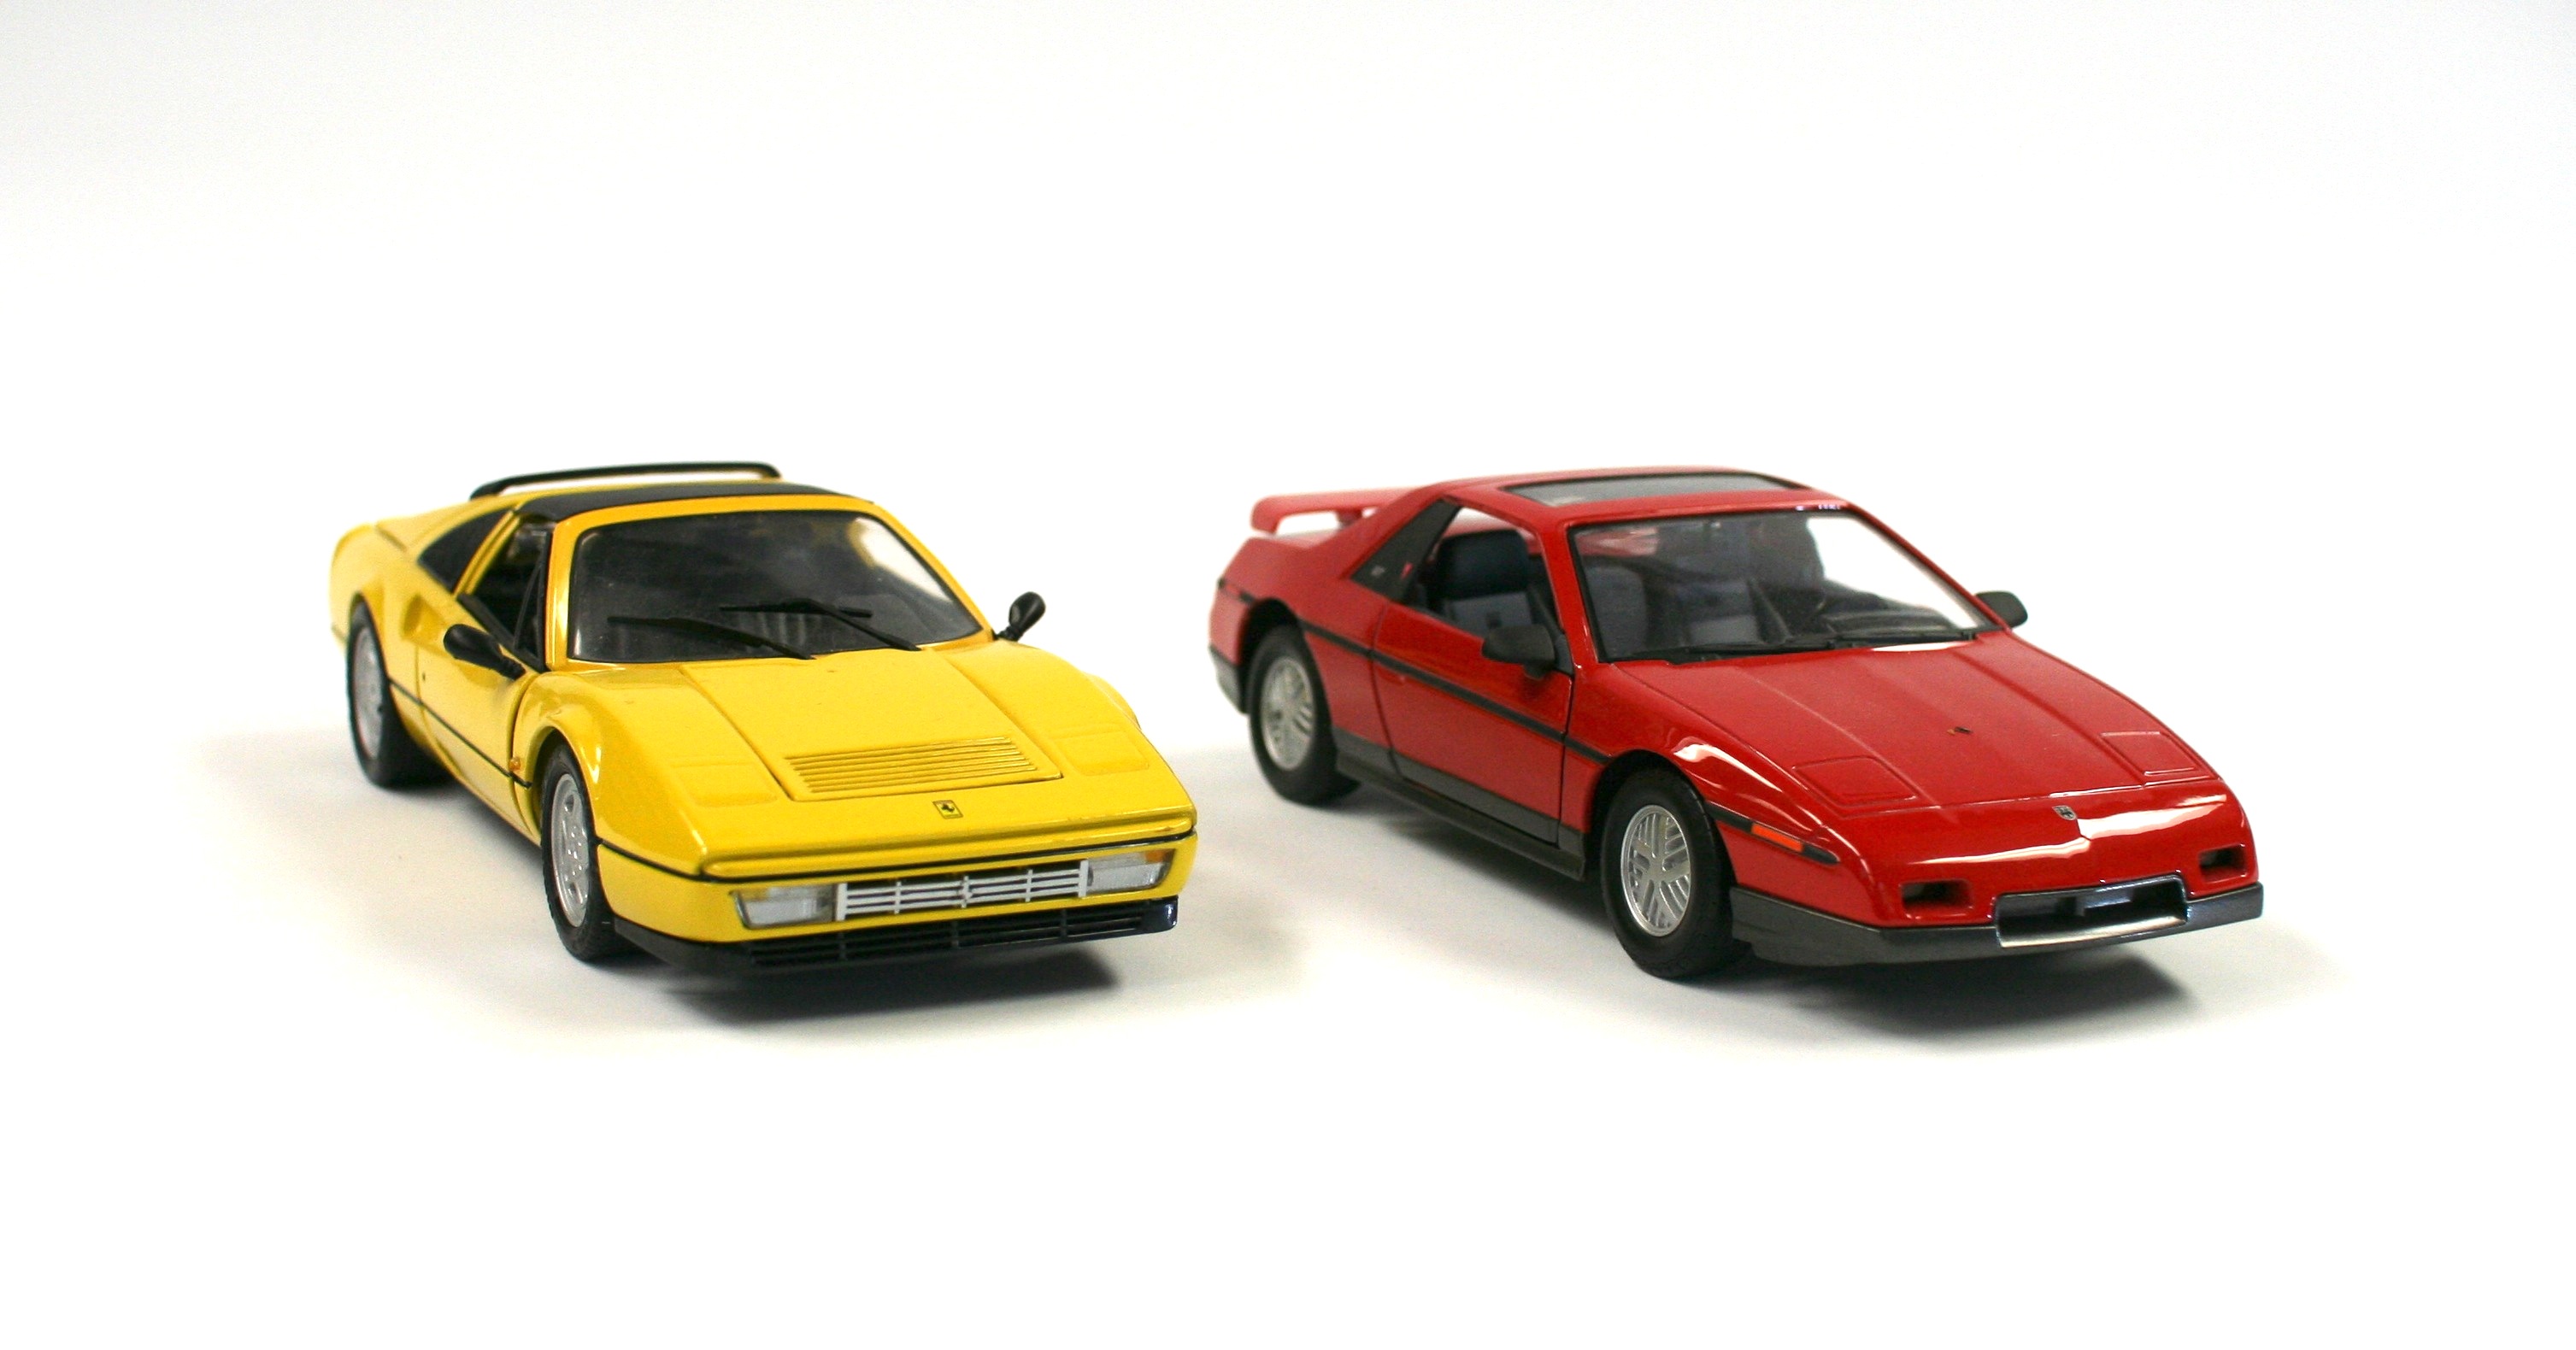 Ferrari_308_and_Pontiac_Fiero_1-18_scale_models_(illustrative_of_Ferrari_v._Corporate_Concepts_involving_Mera)_no._5696.jpg